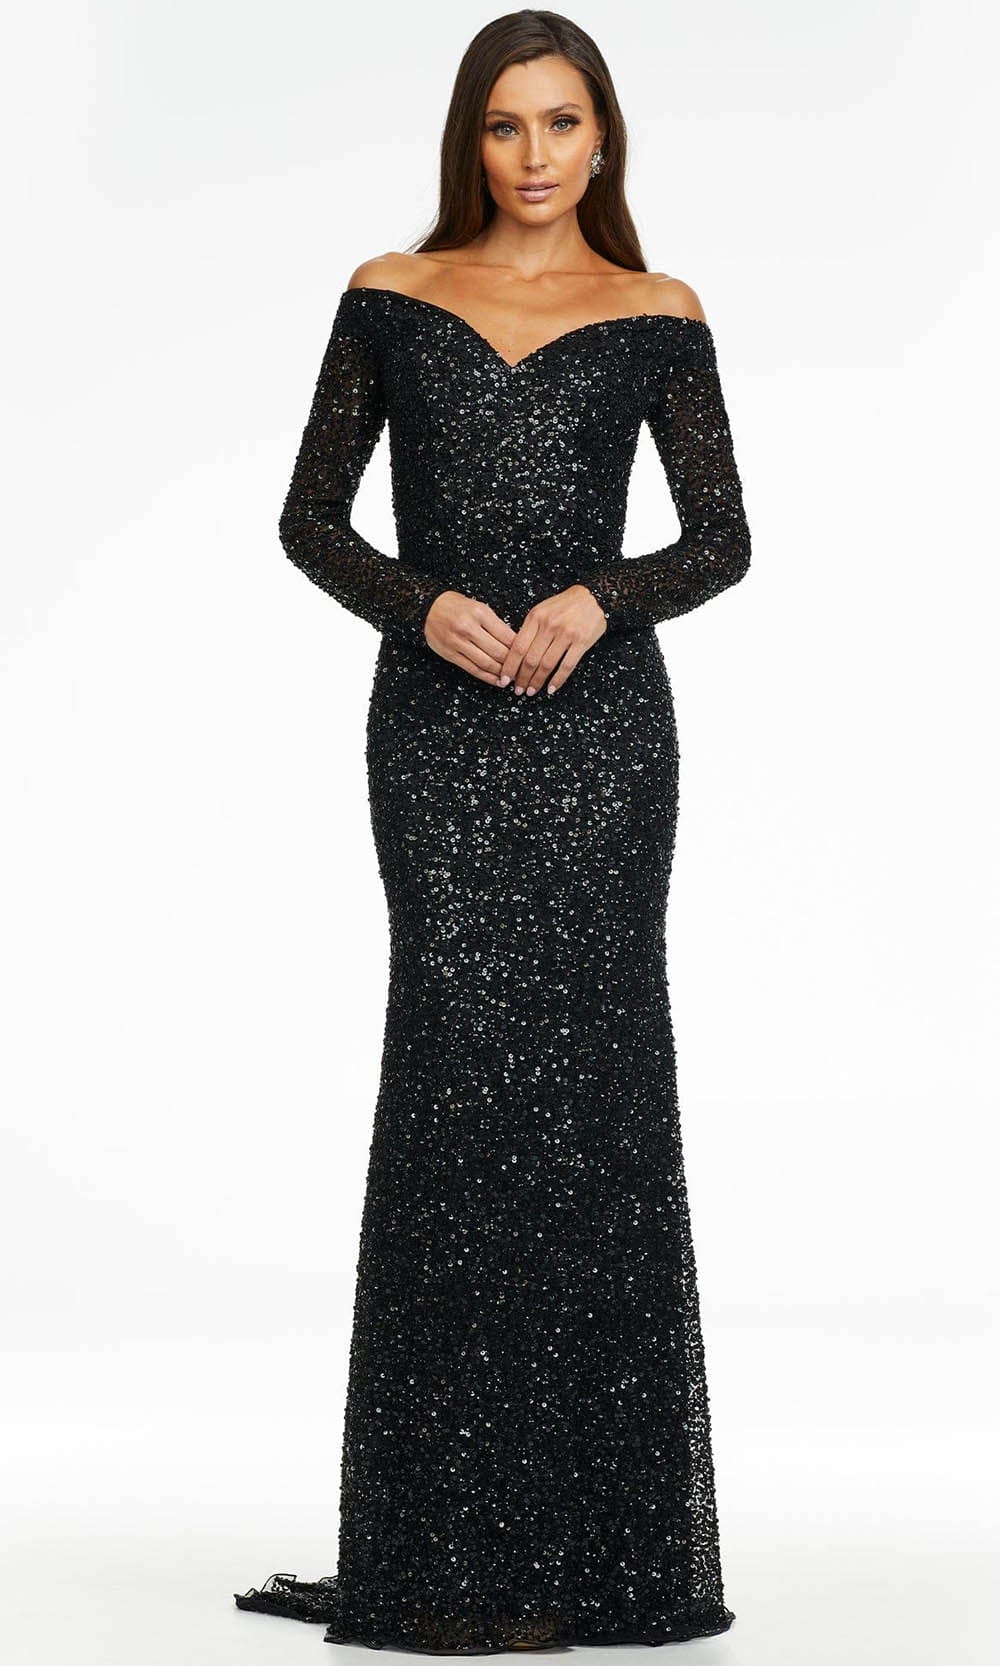 Ashley Lauren - 11176 Long Sleeve Sequin Gown Prom Dresses 0 / Black